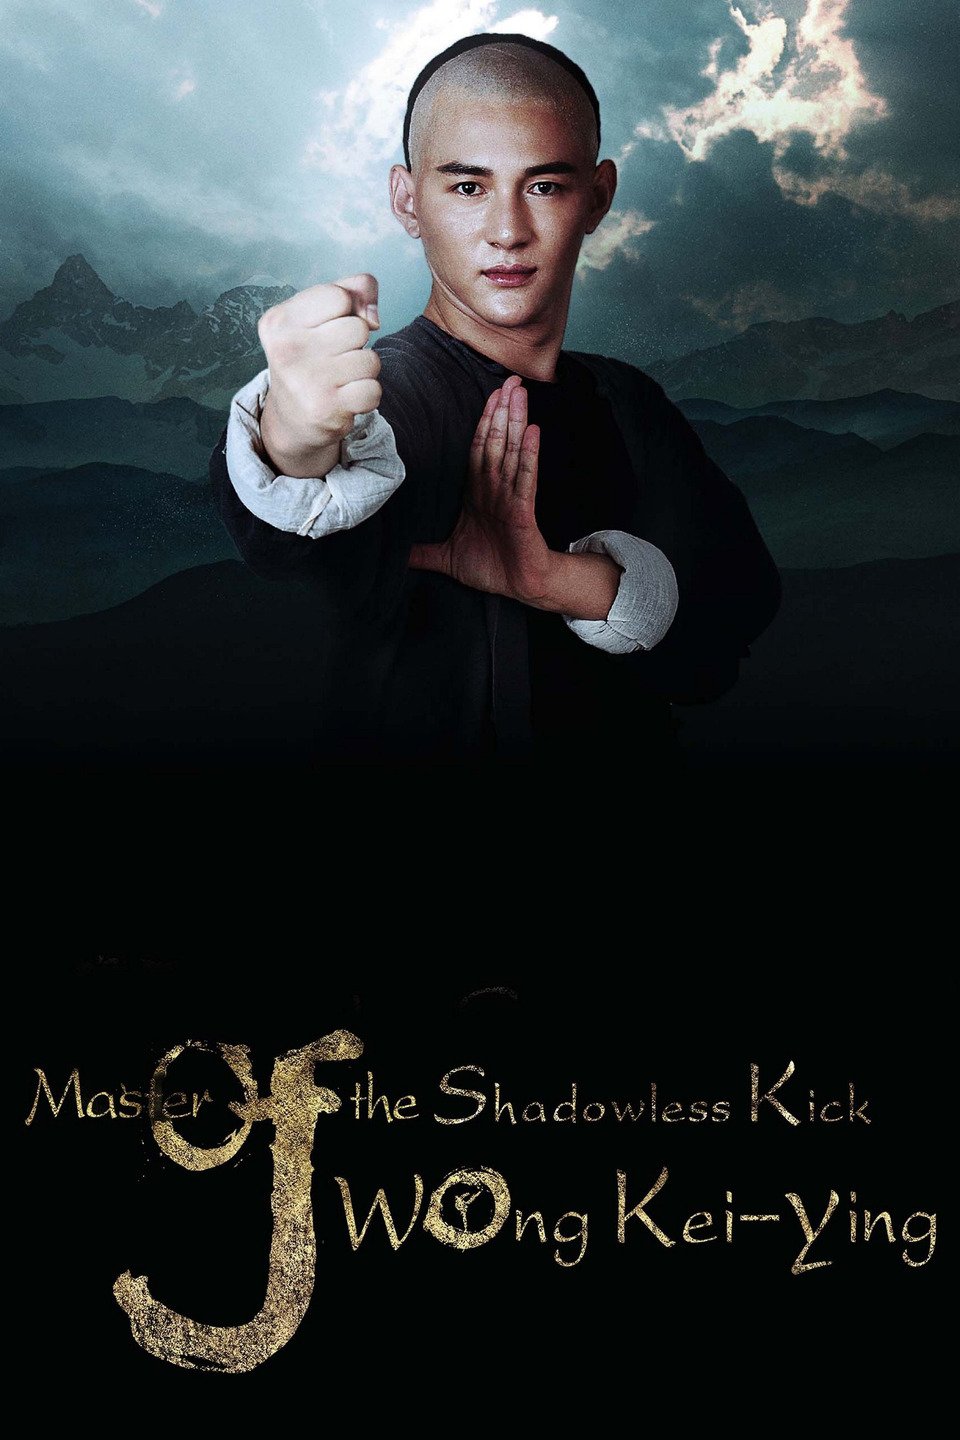 [MINI Super-HQ] Master of the Shadowless Kick: Wong Kei-Ying (2016) หวง ฉี อิง บาทาไร้เงา [1080p] [พากย์ไทย DTS + เสียงจีน DTS] [BrRip.DTS.x264] [บรรยายไทย + อังกฤษ] [เสียงไทย + ซับไทย] [ONE2UP]